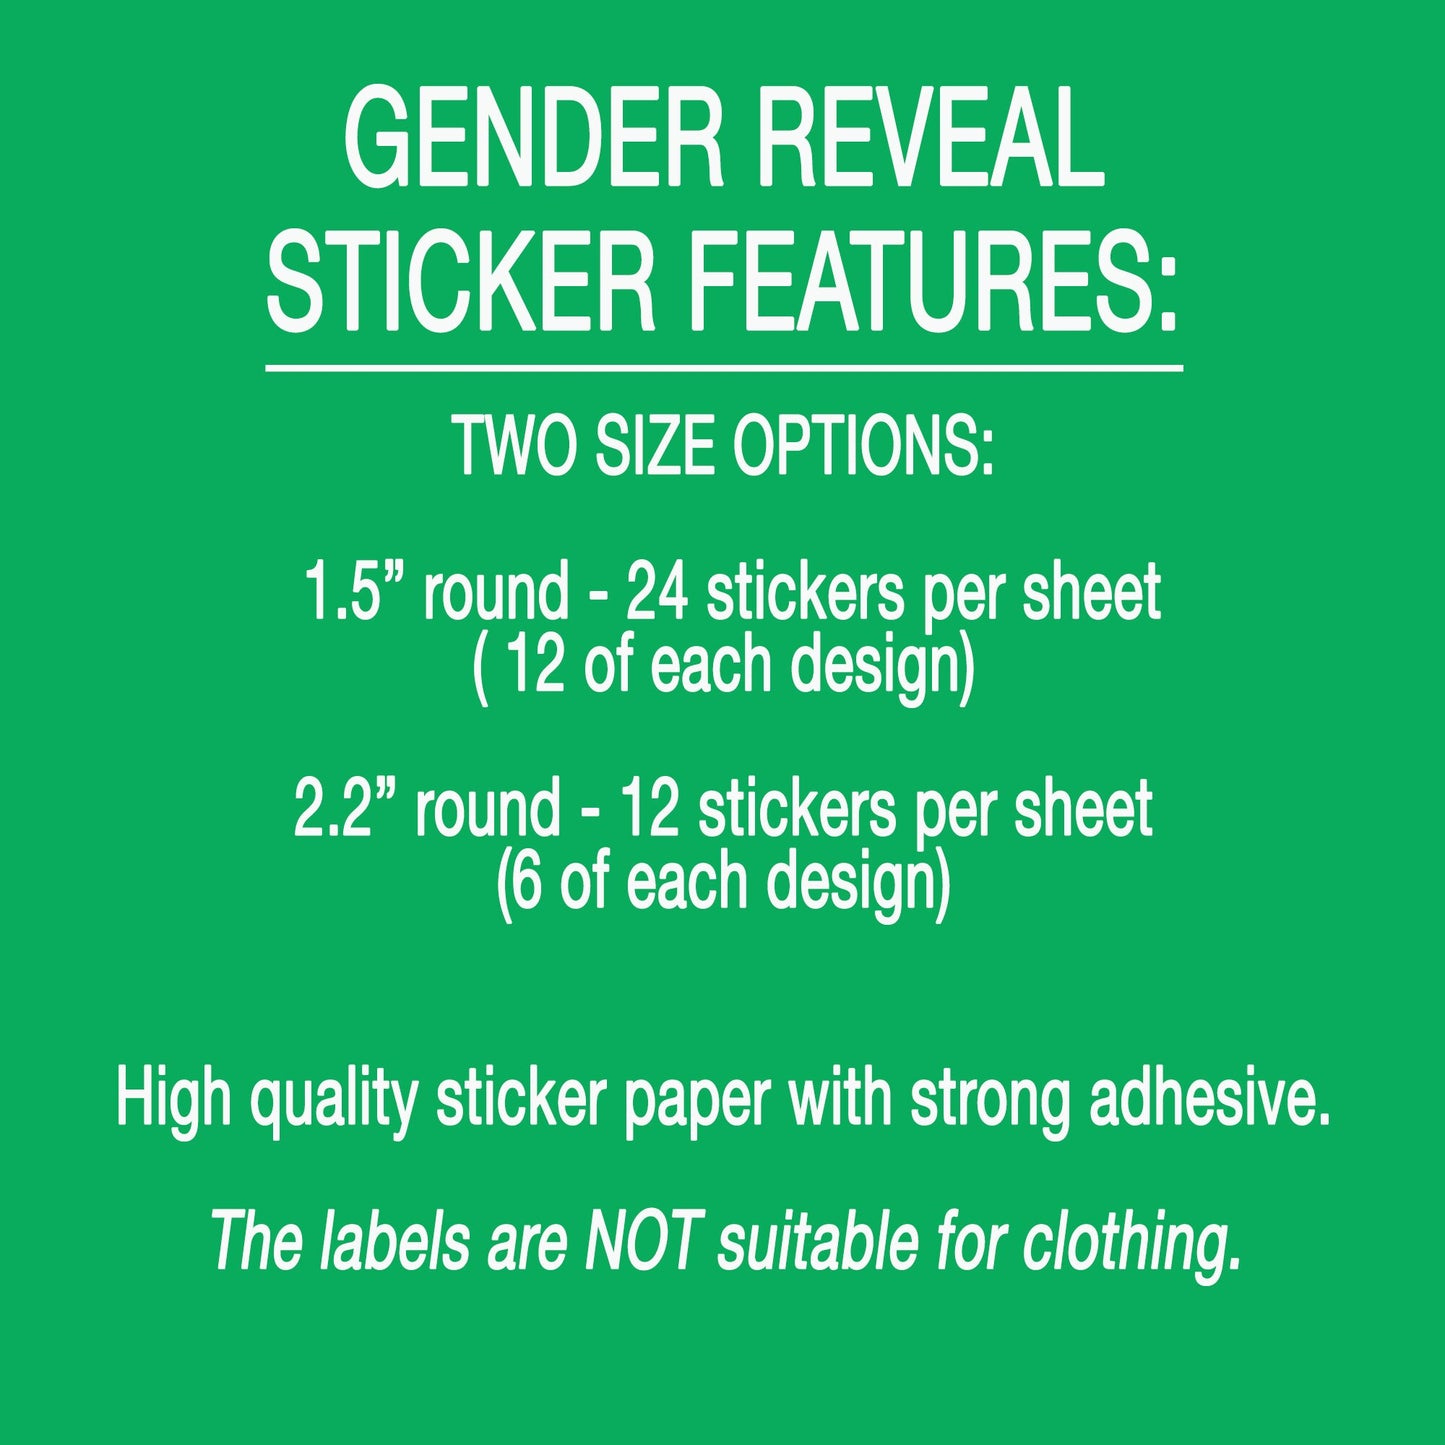 Gender Reveal, Team Bows, Team Trucks, Vintage Retro Truck, Sticker Sheet, Party Favor, Team Boy, Team Girl, Baby Shower Sticker, He or She